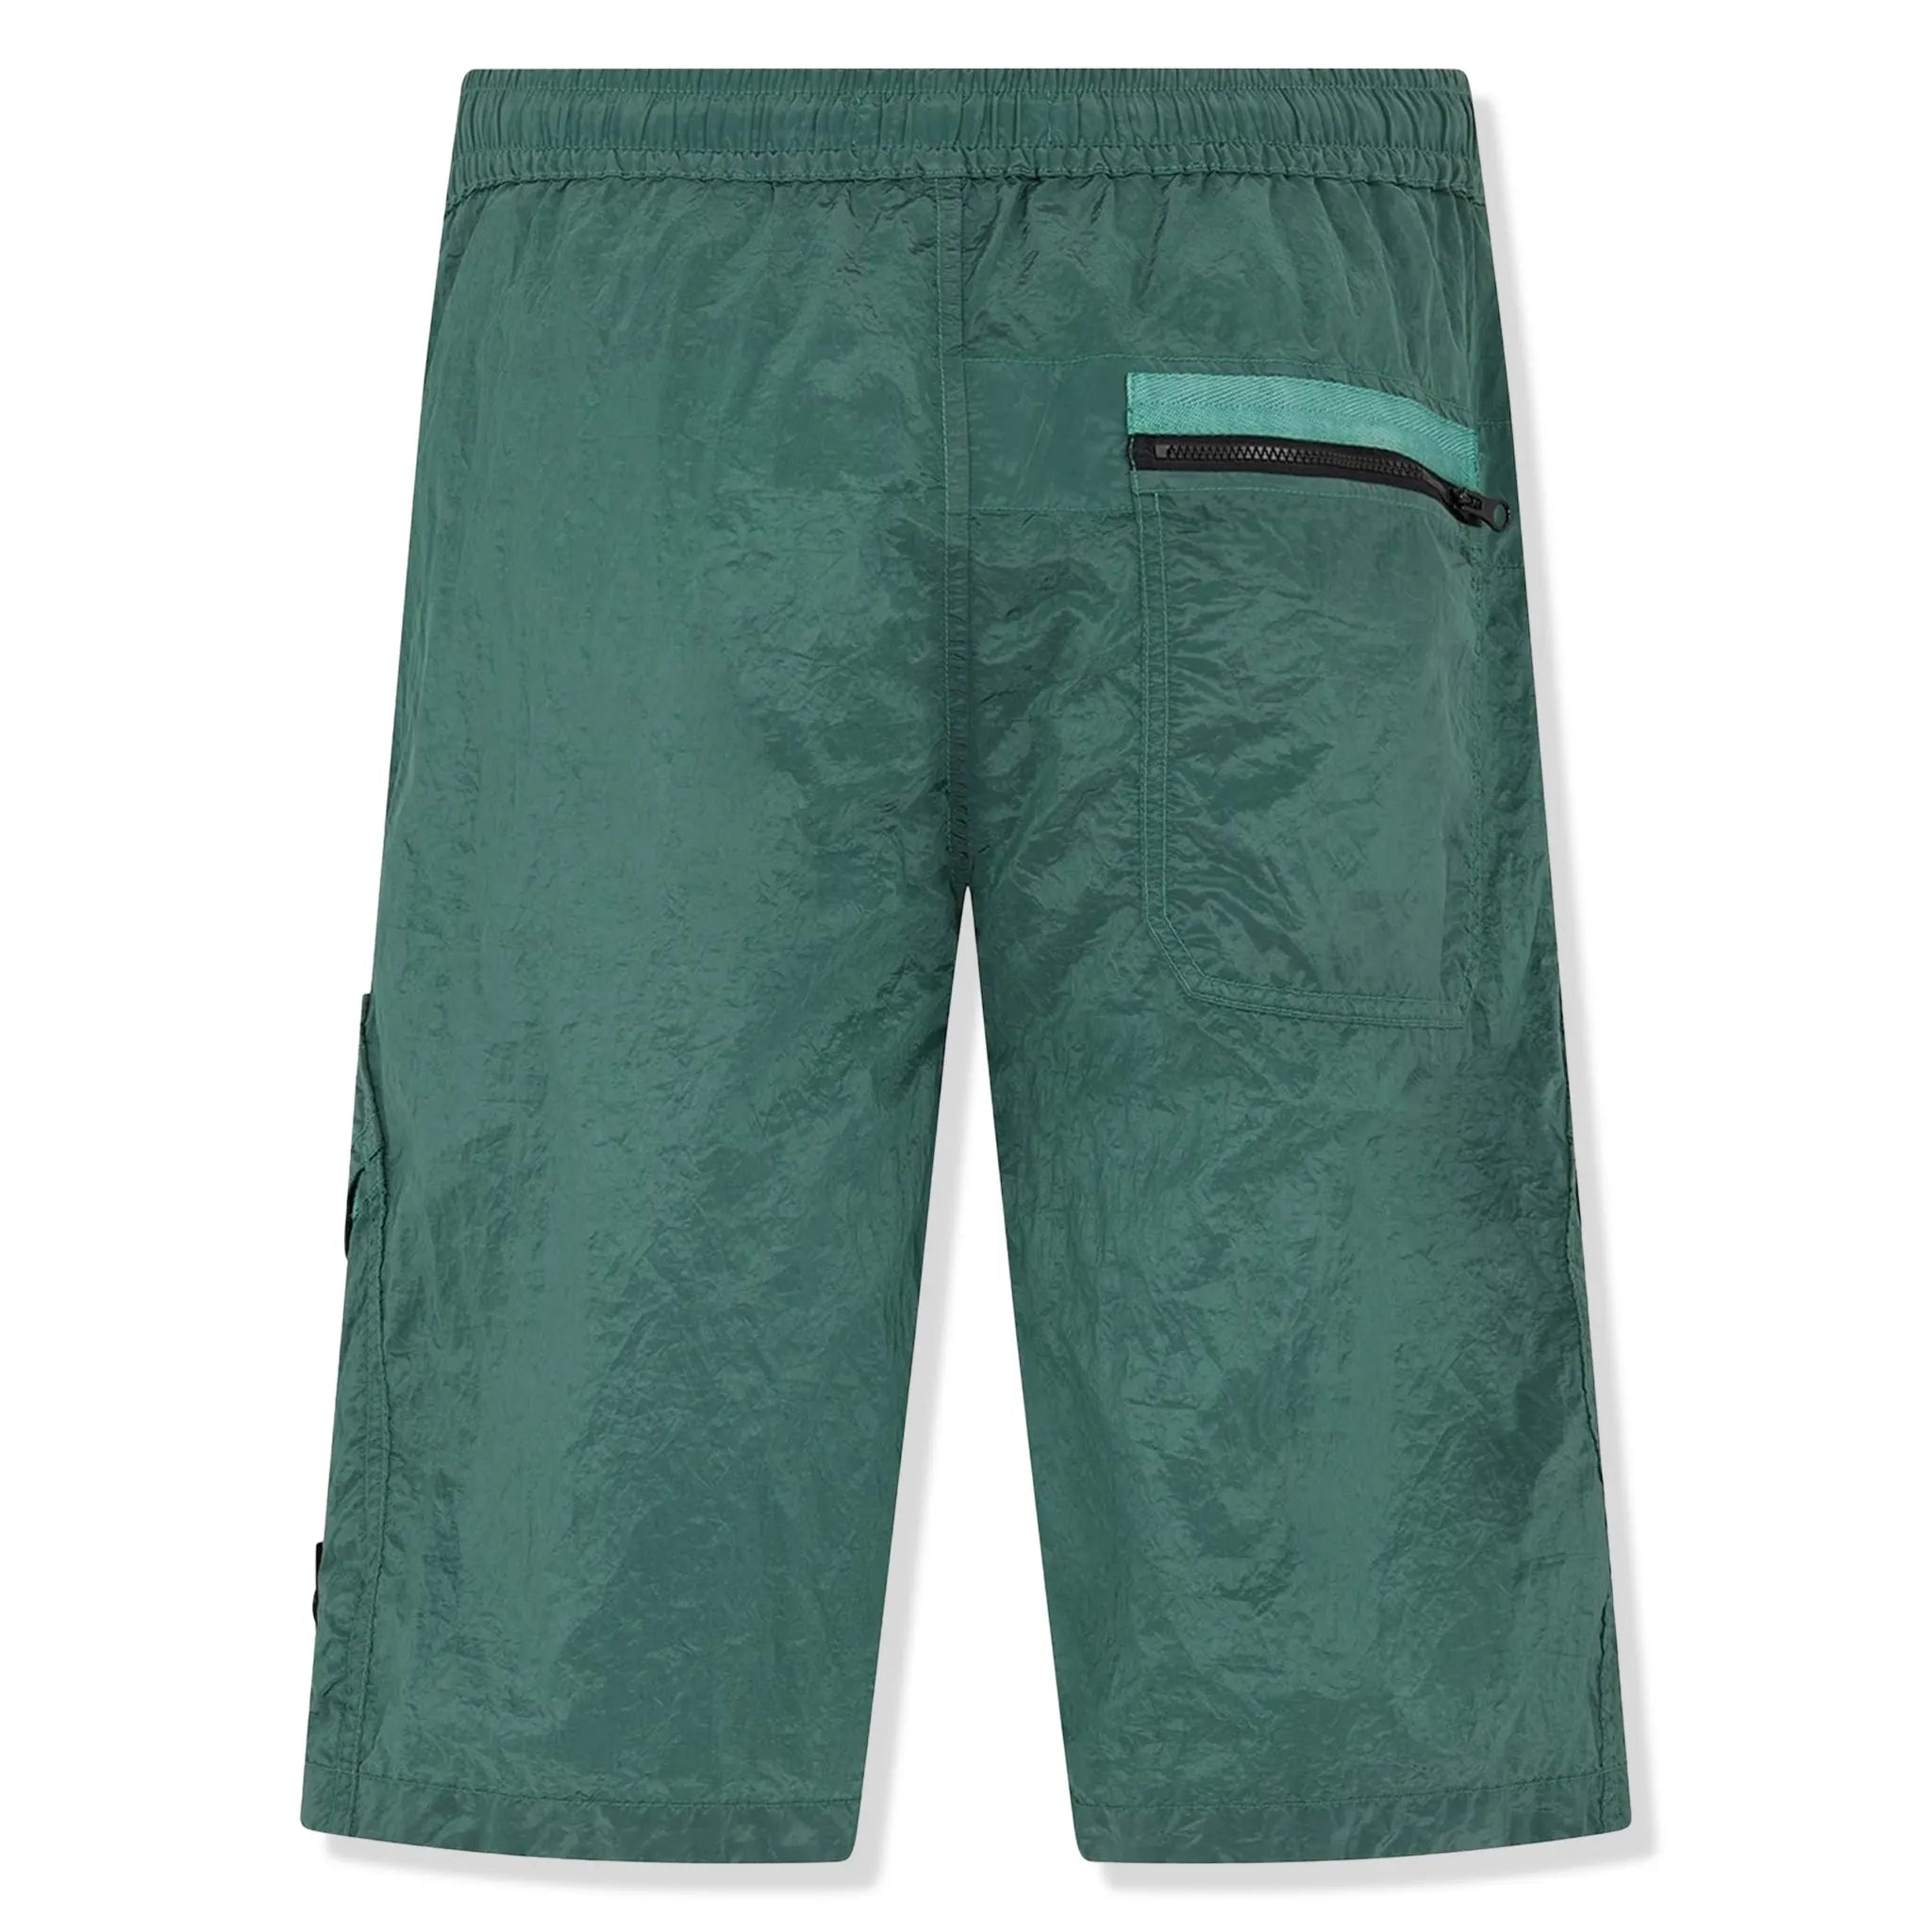 Back view of Stone Island Nylon Metal Dark Green Shorts